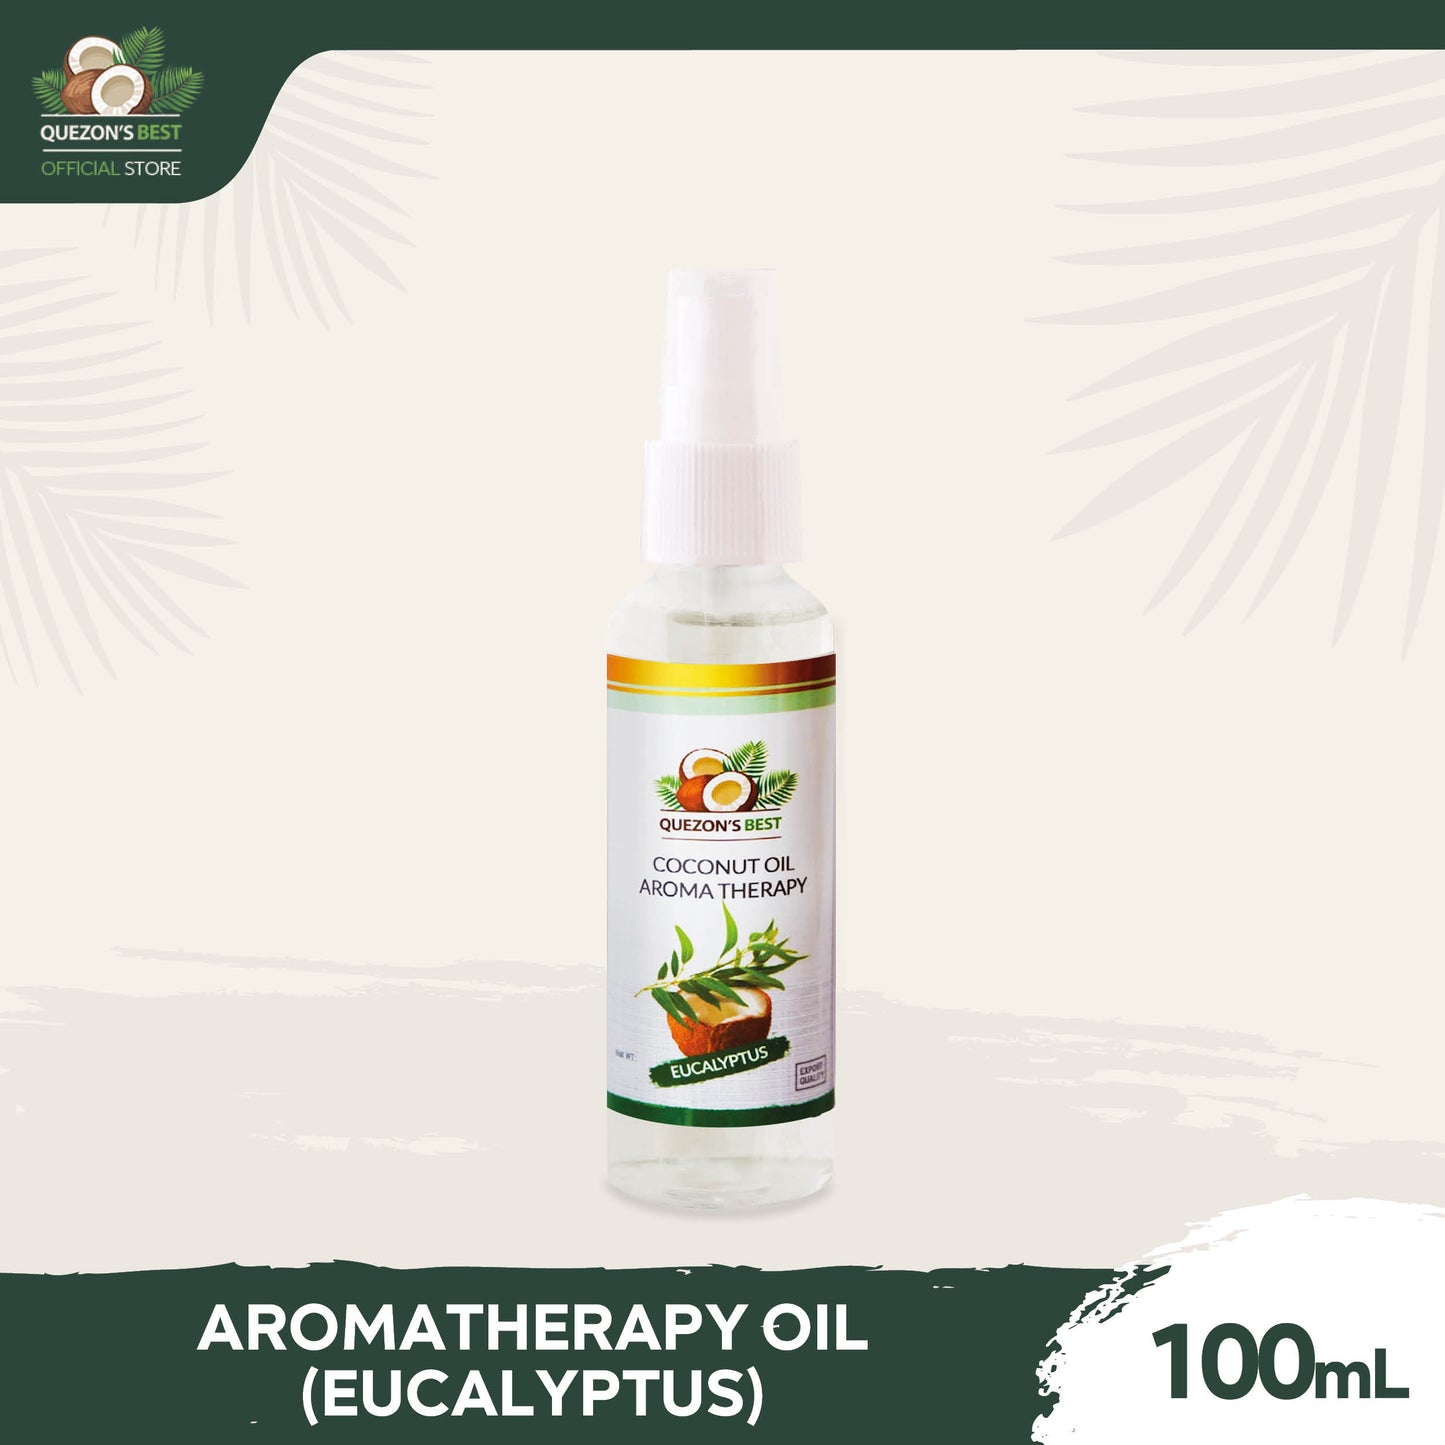 Quezon's Best Aroma Therapy Coconut Oil - Eucalyptus 100mL